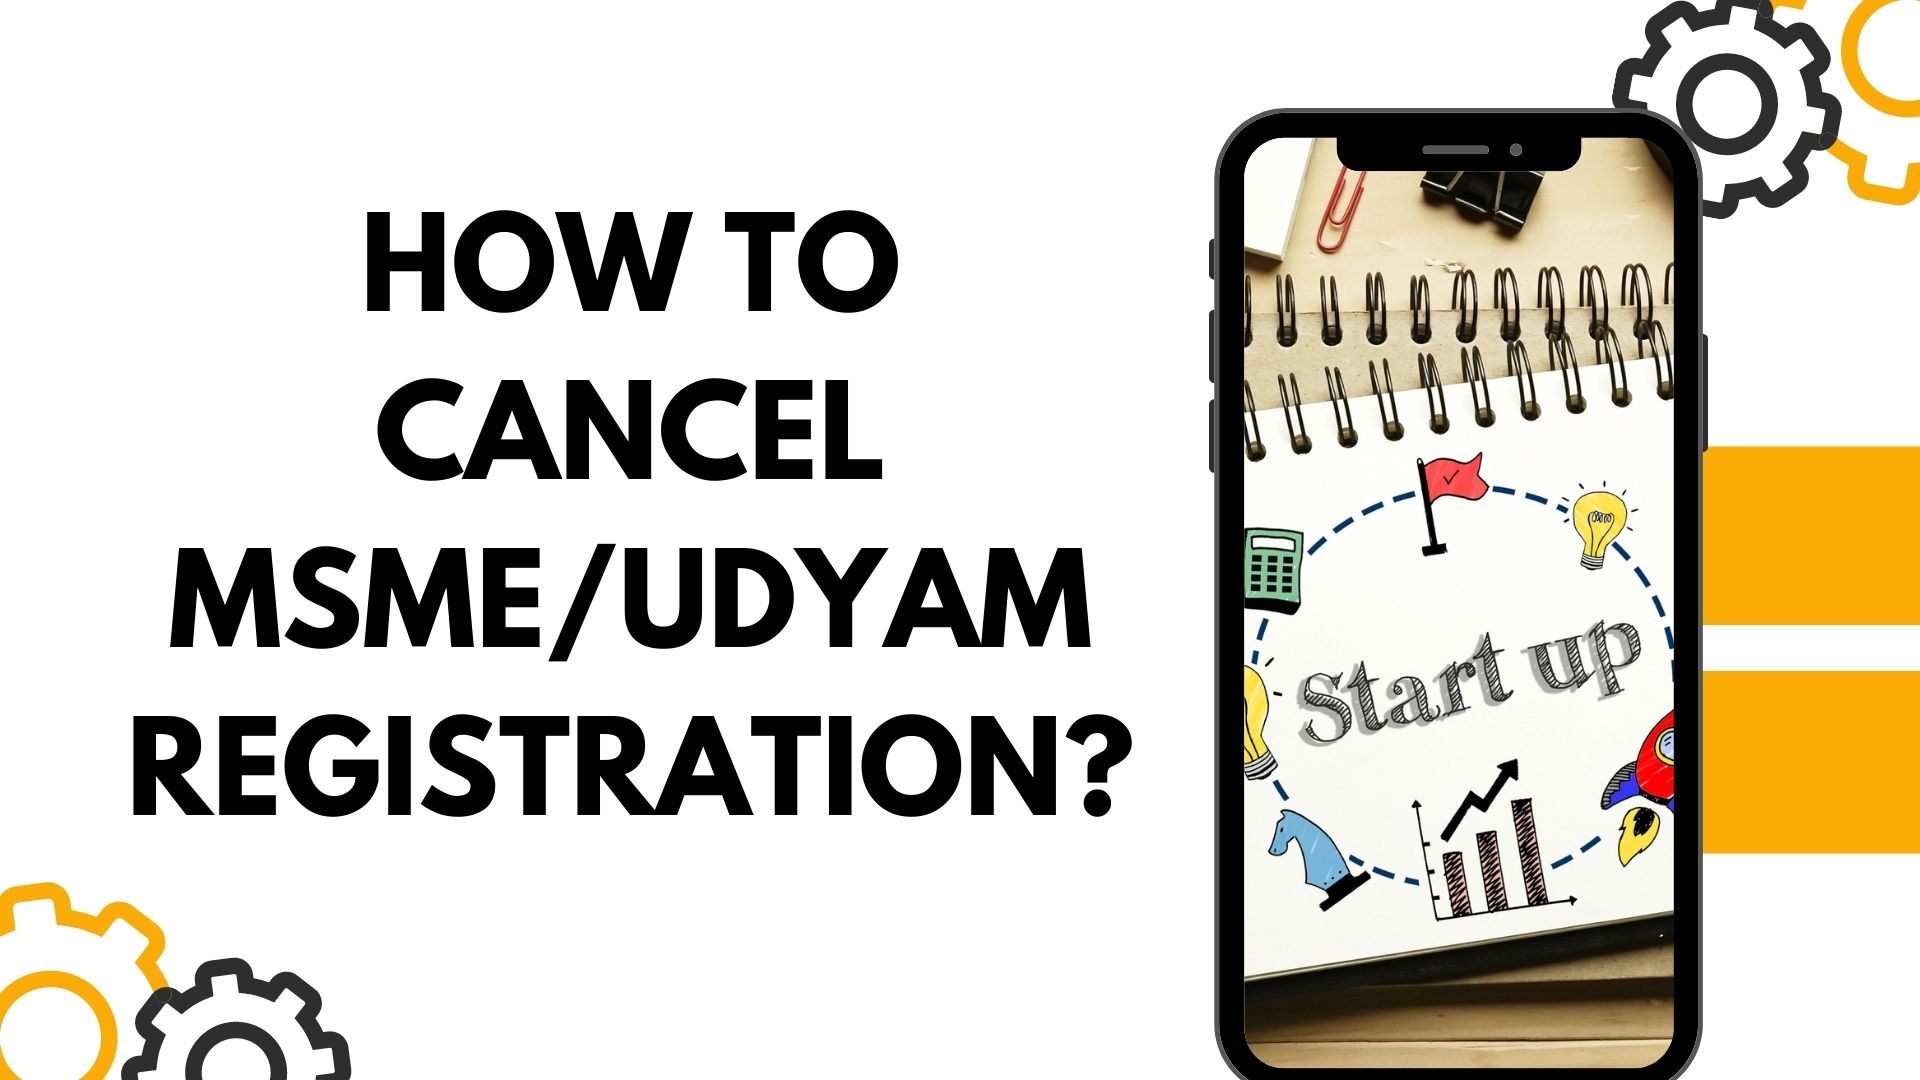 How to cancel MSME/udyam registration?